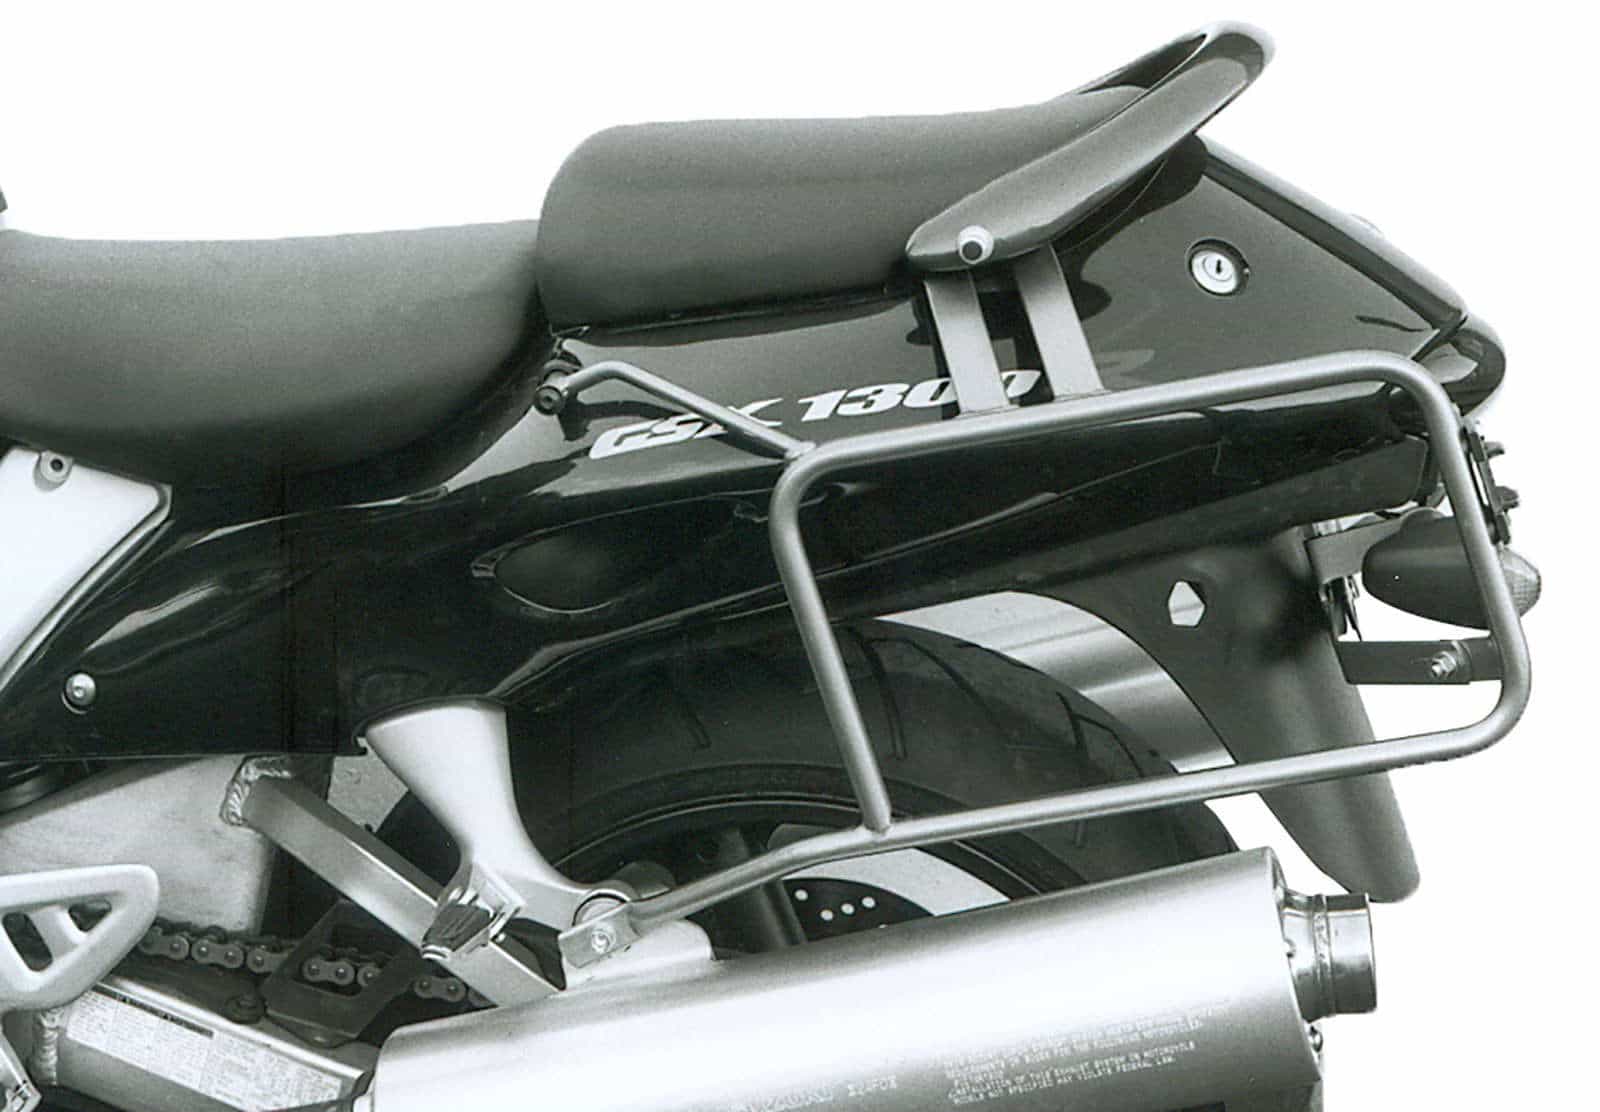 Sidecarrier permanent mounted black for Suzuki GSX 1300 R Hayabusa (1999-2007)